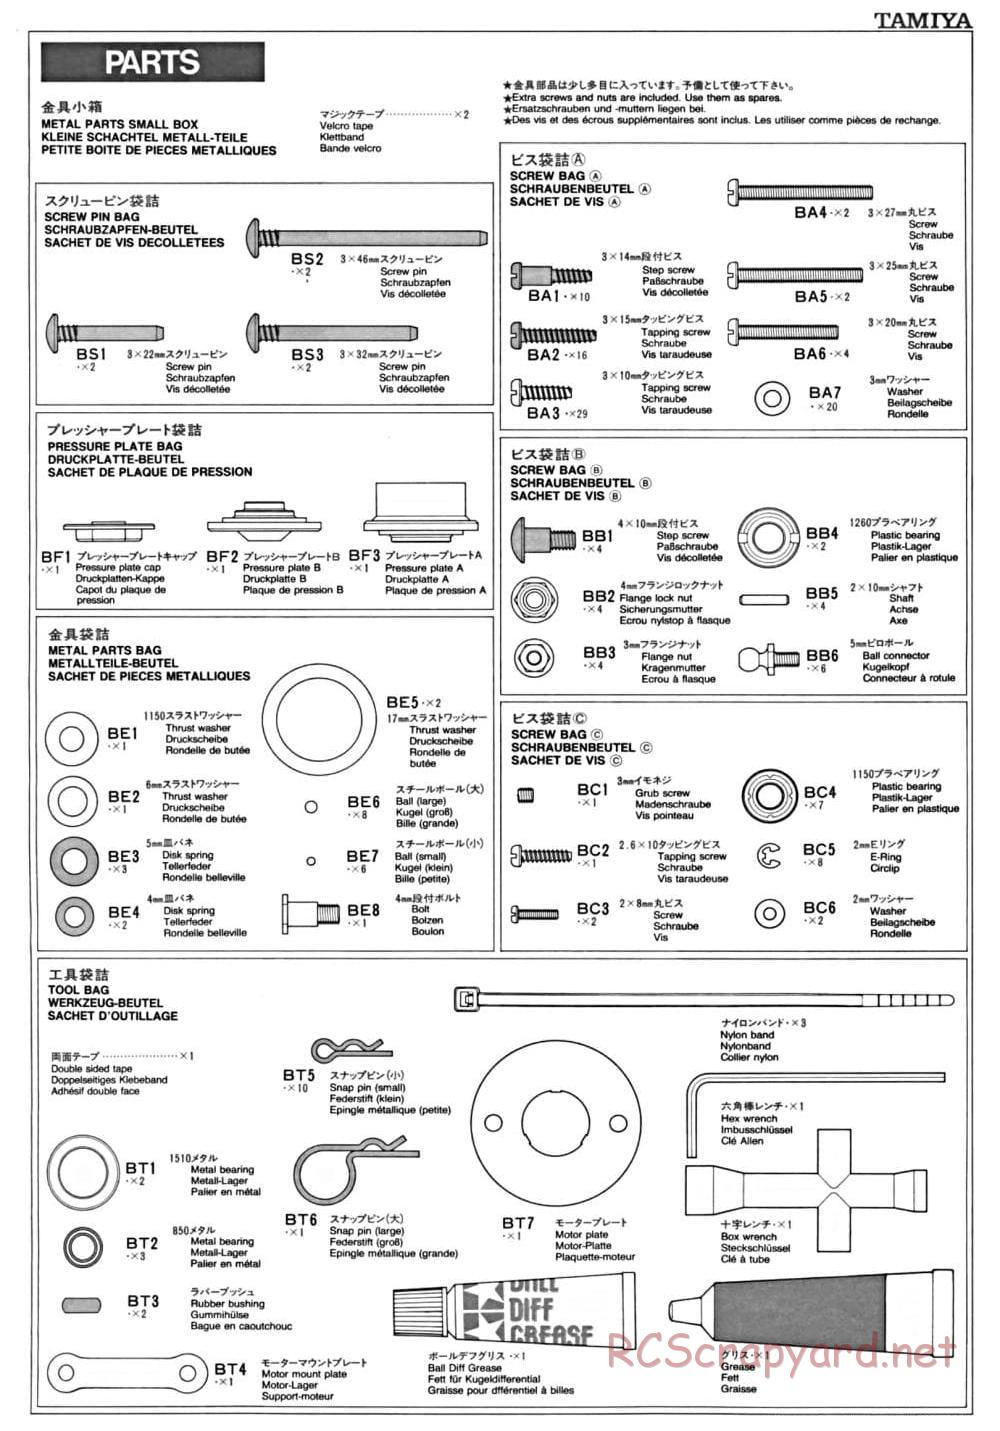 Tamiya - FF-01 Chassis - Manual - Page 23